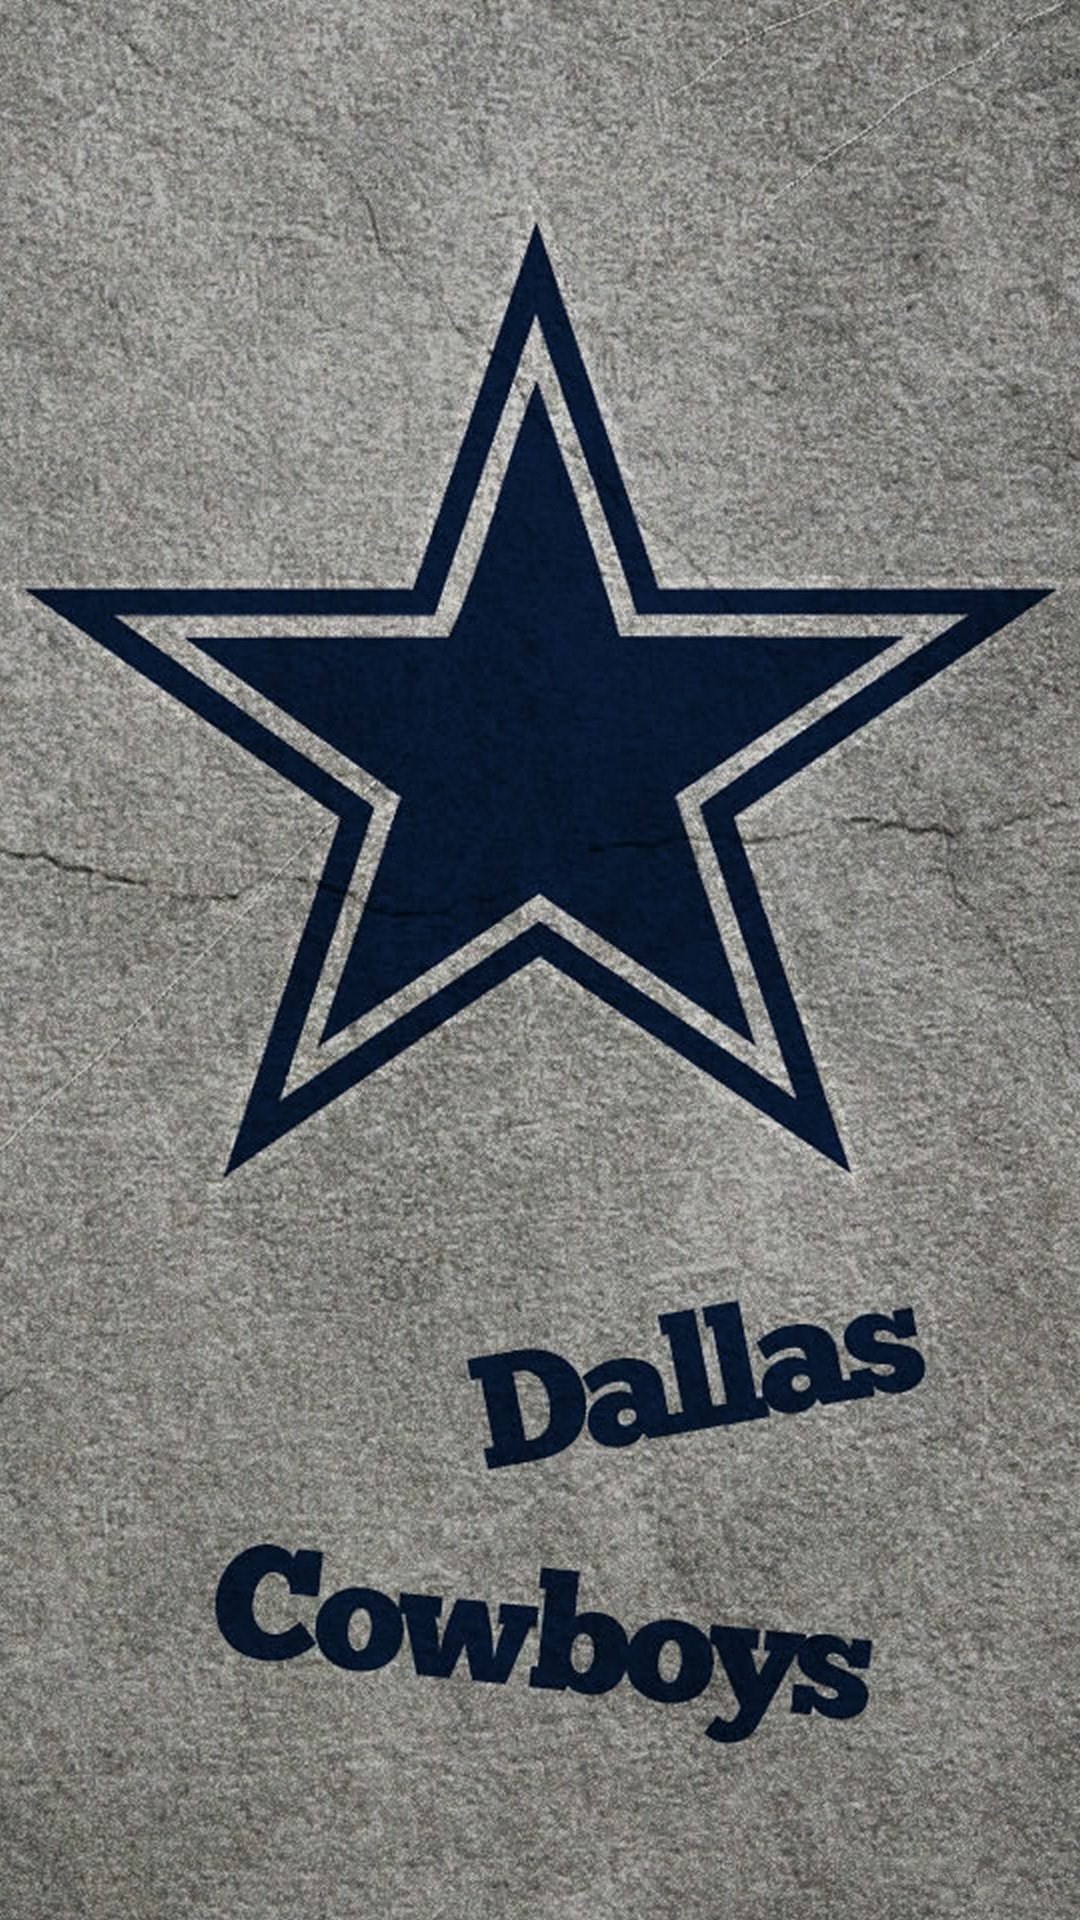 Dallas cowboys iphone hd wallpaper